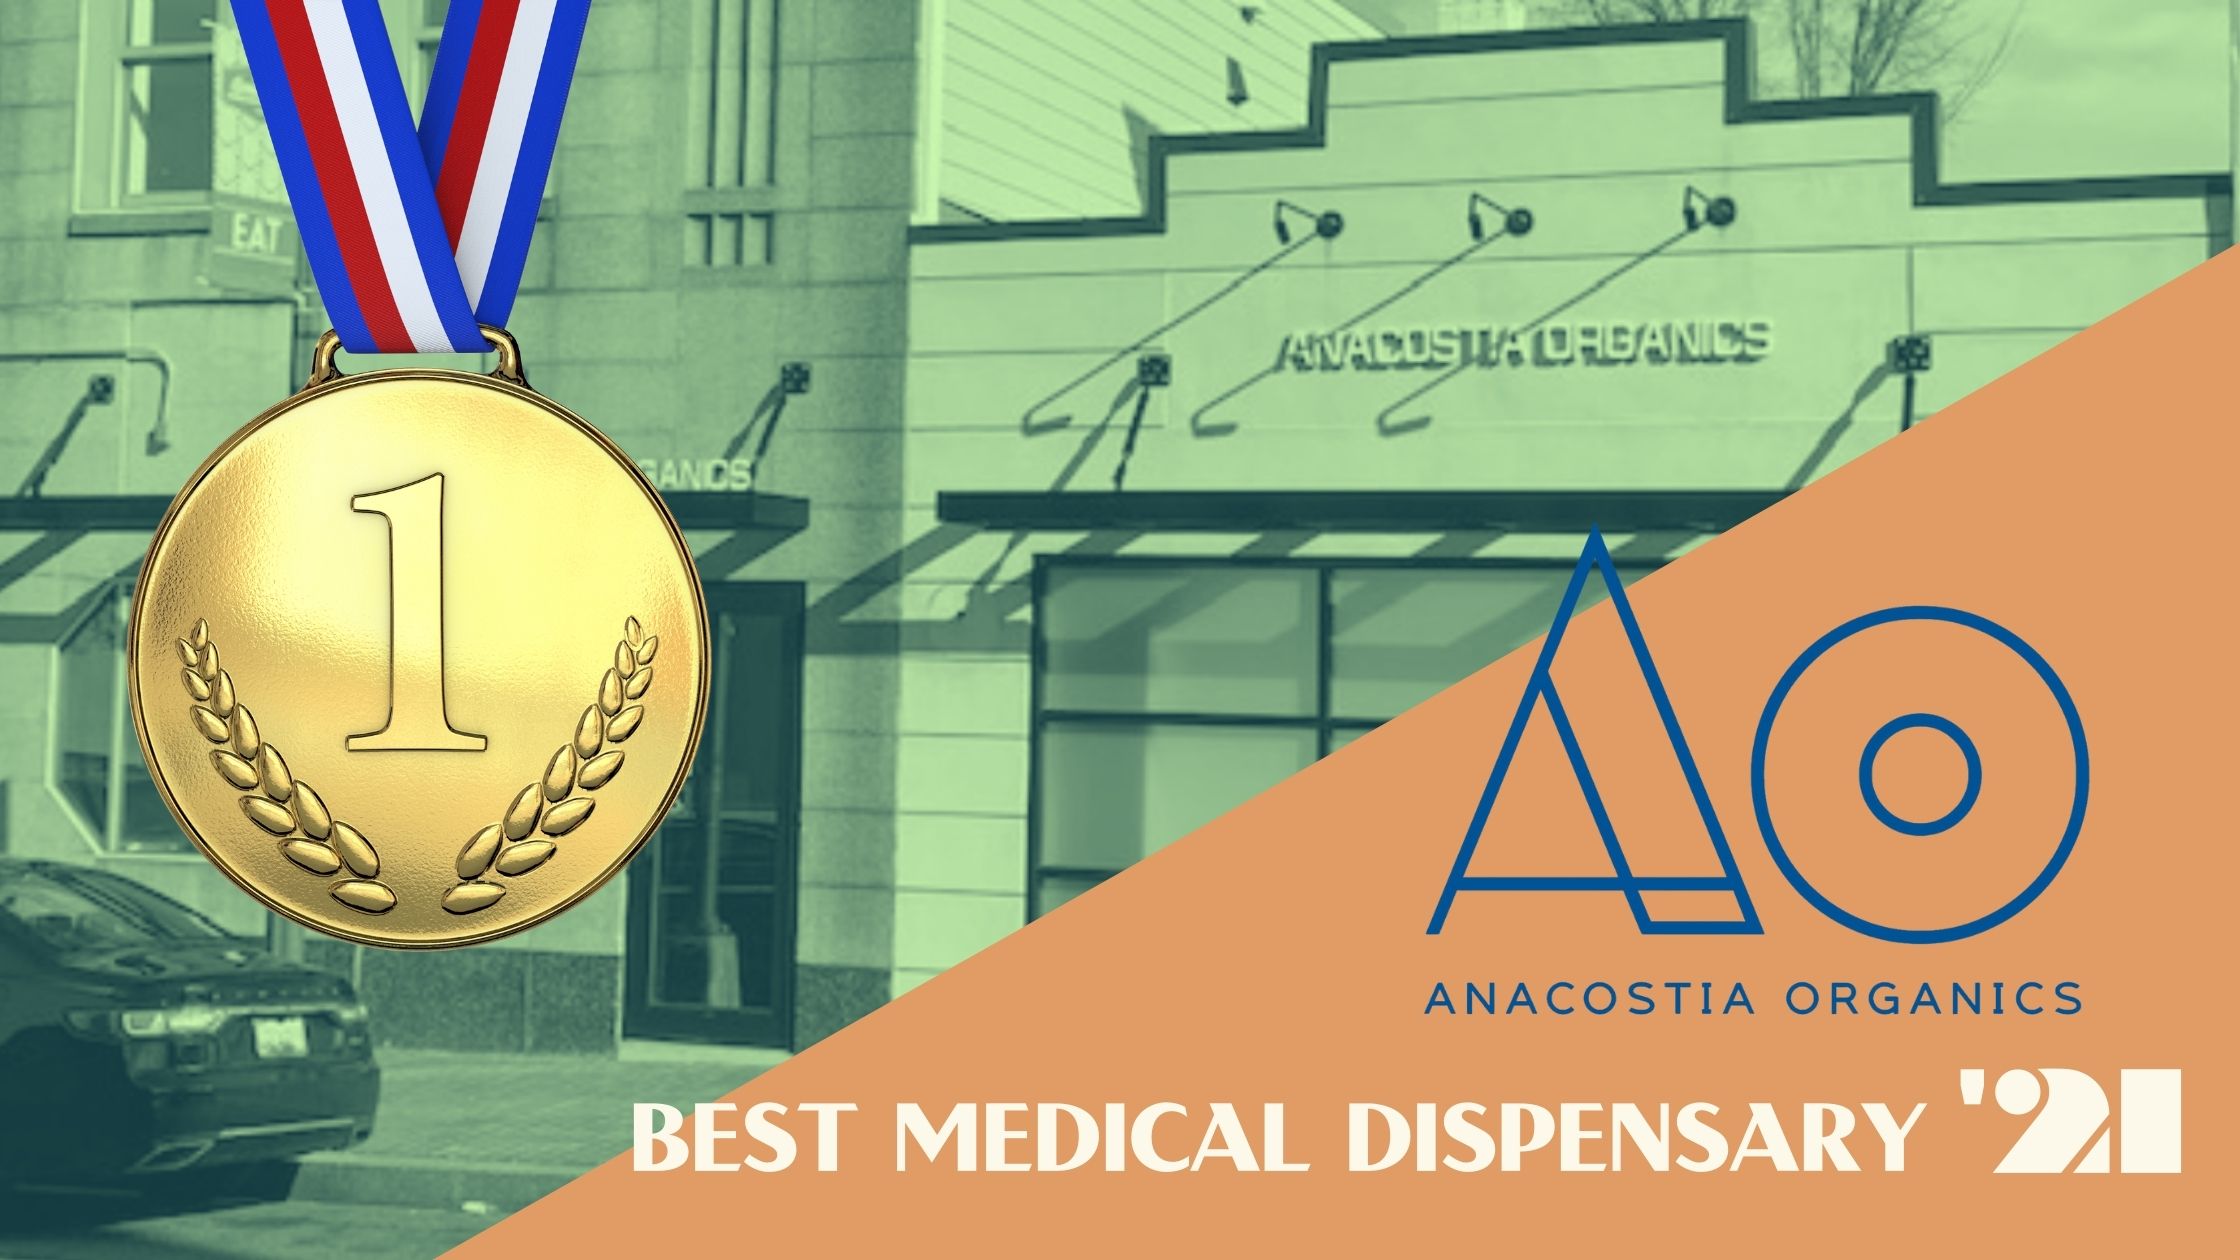 Best Medical Dispensary anacostia organics